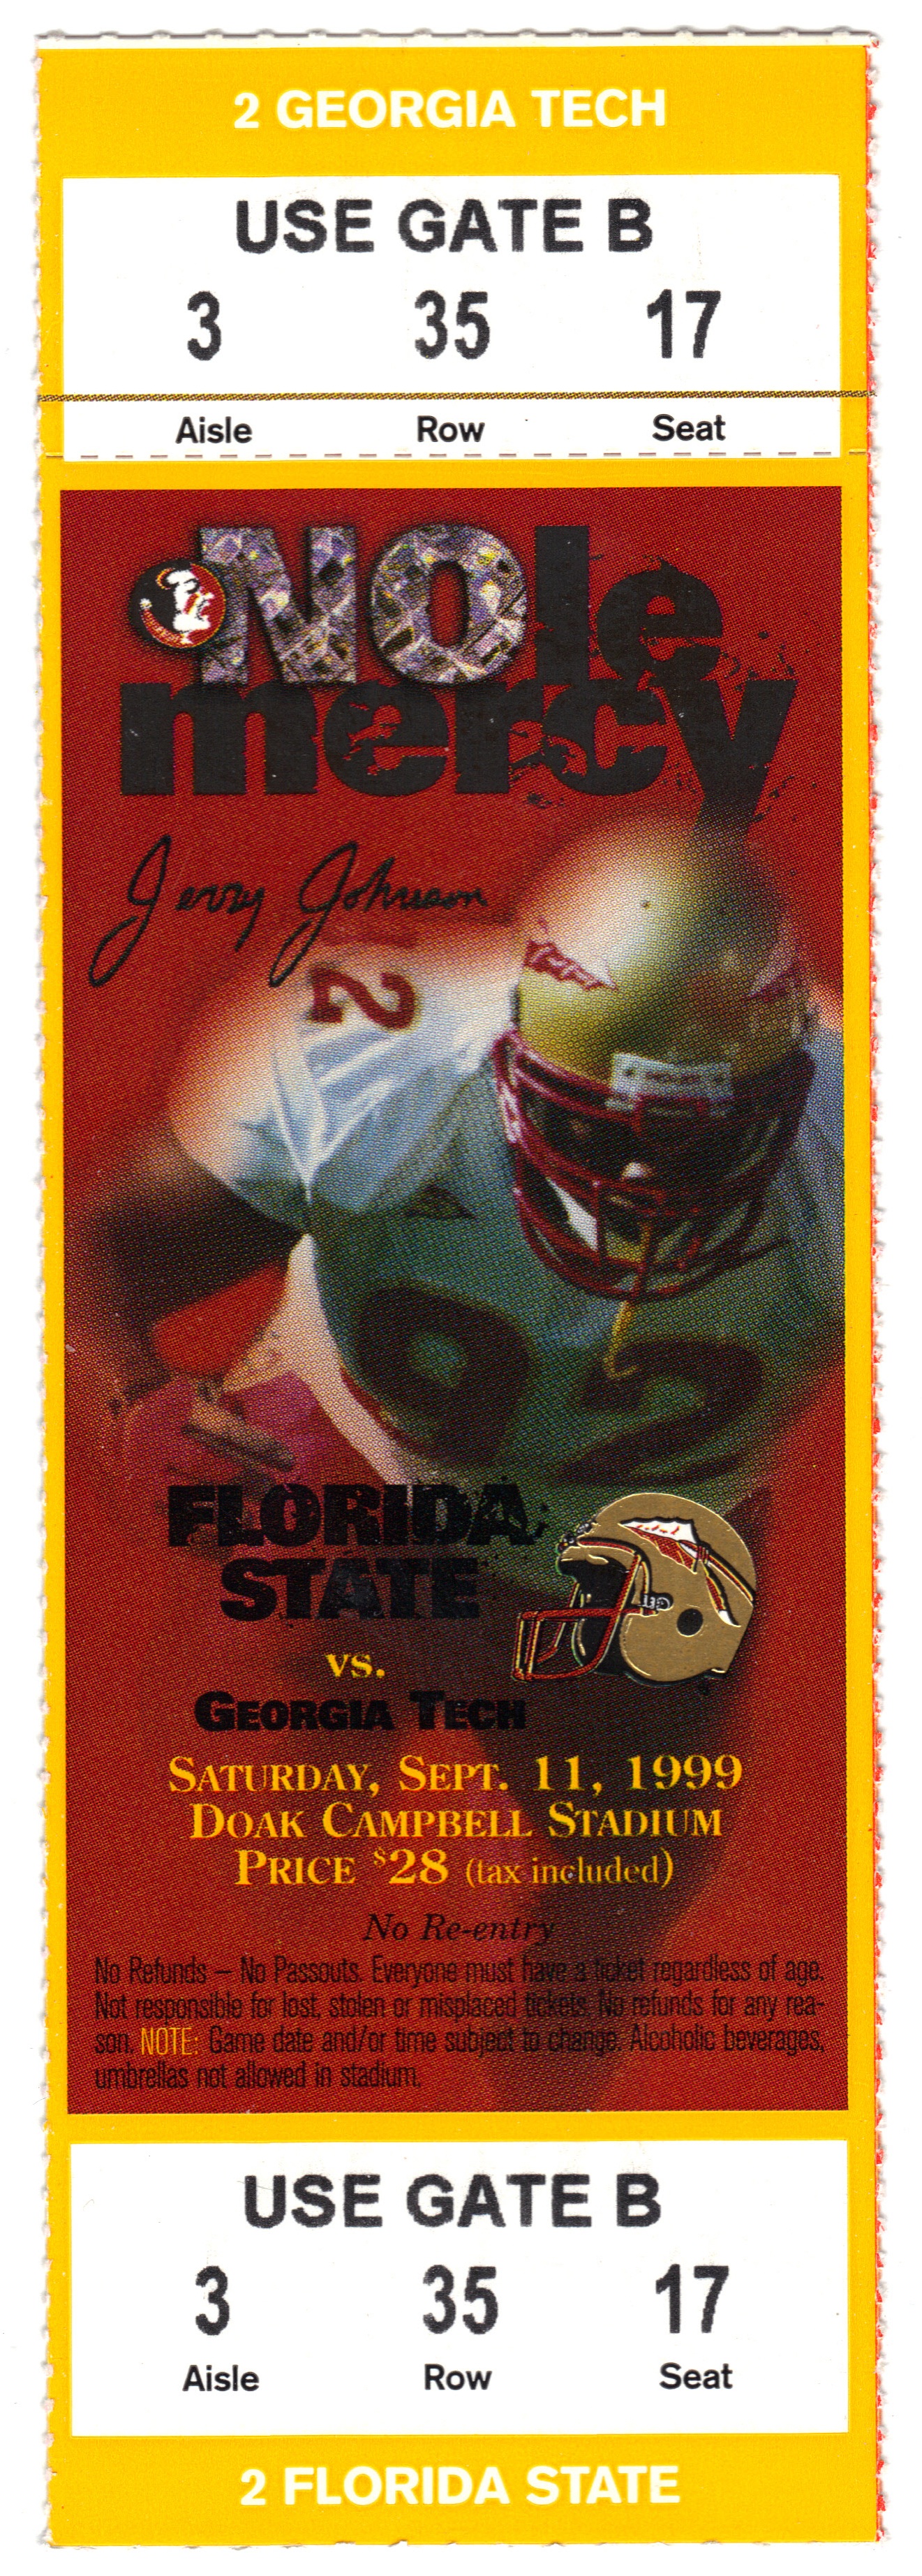 Georgia Tech at Florida State - 1999